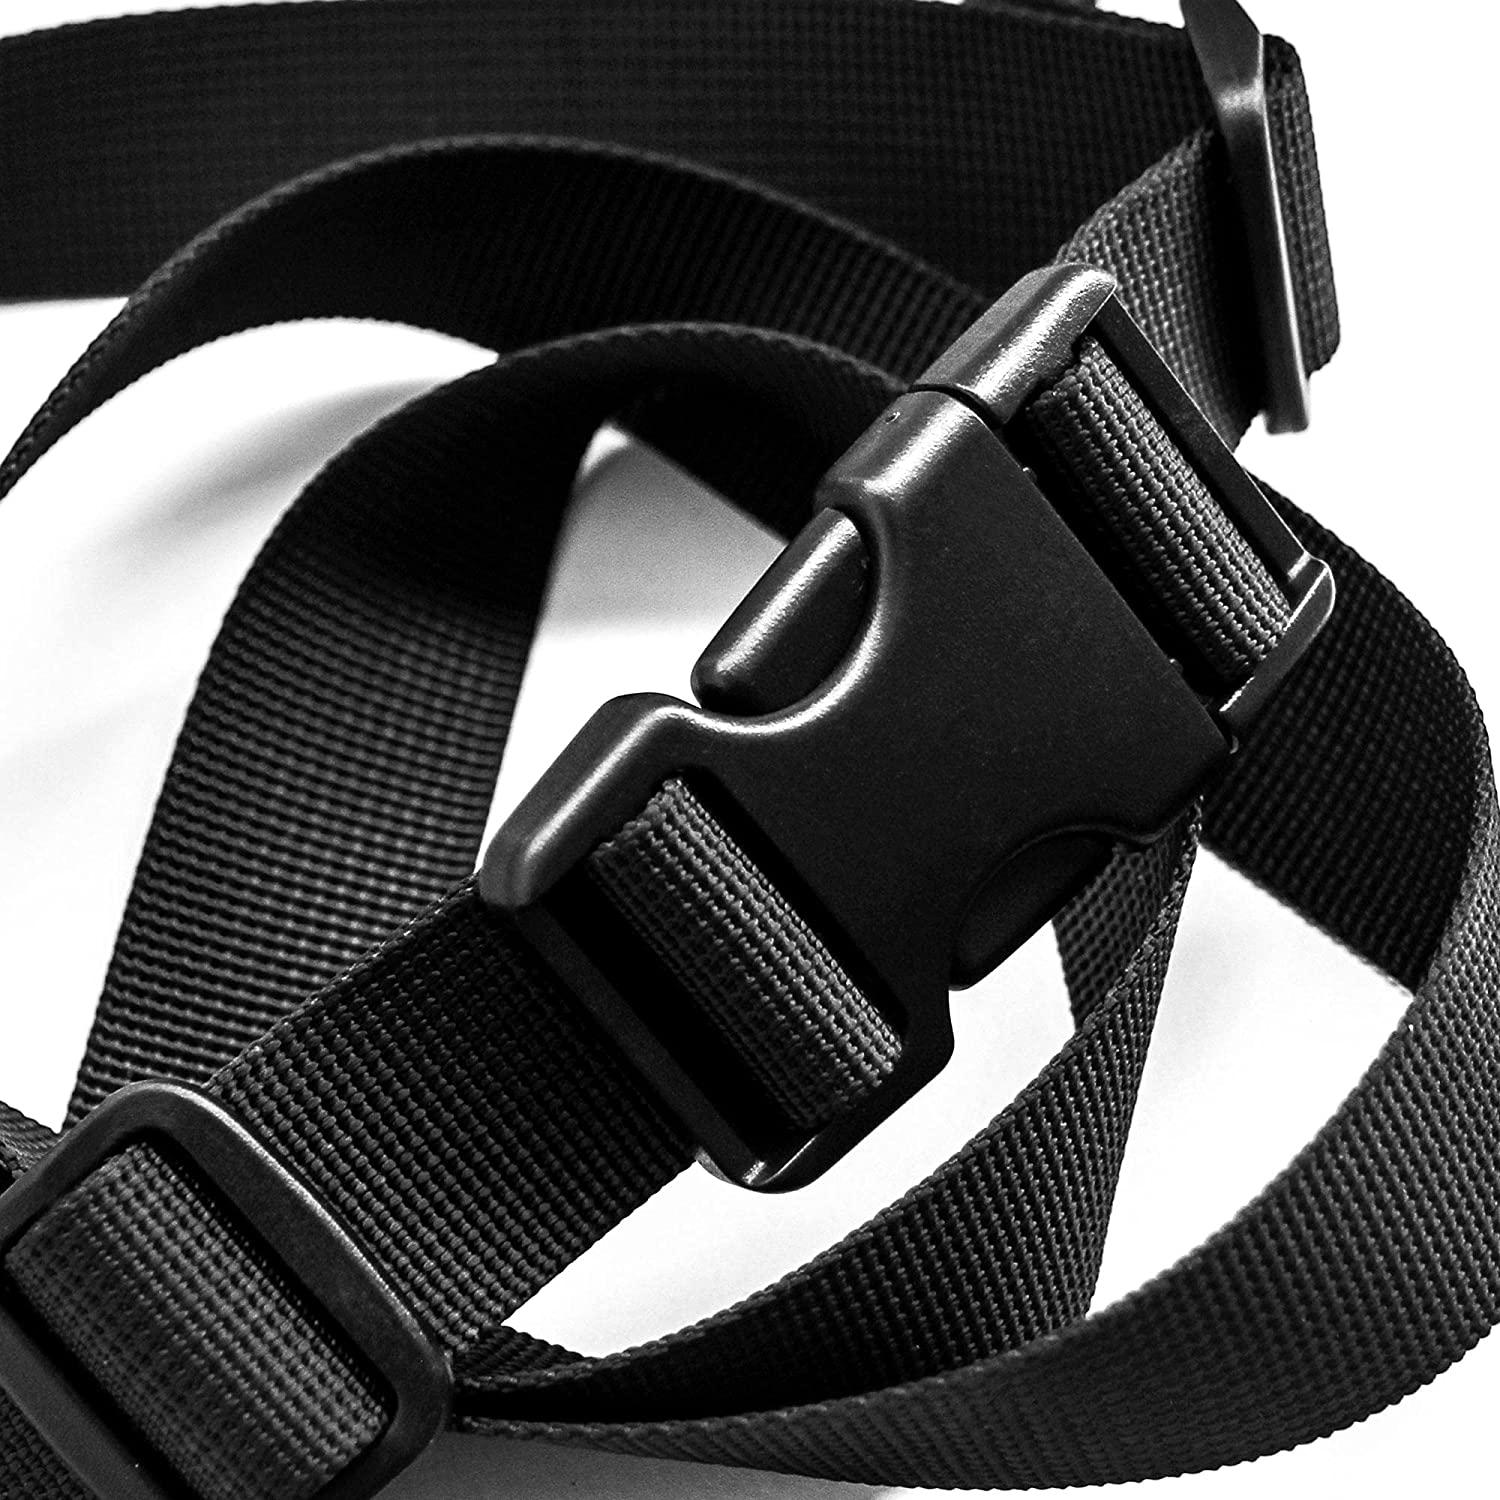 Black Side Release Acculoc Buckle Plastic Clasp Quick Nylon Belt